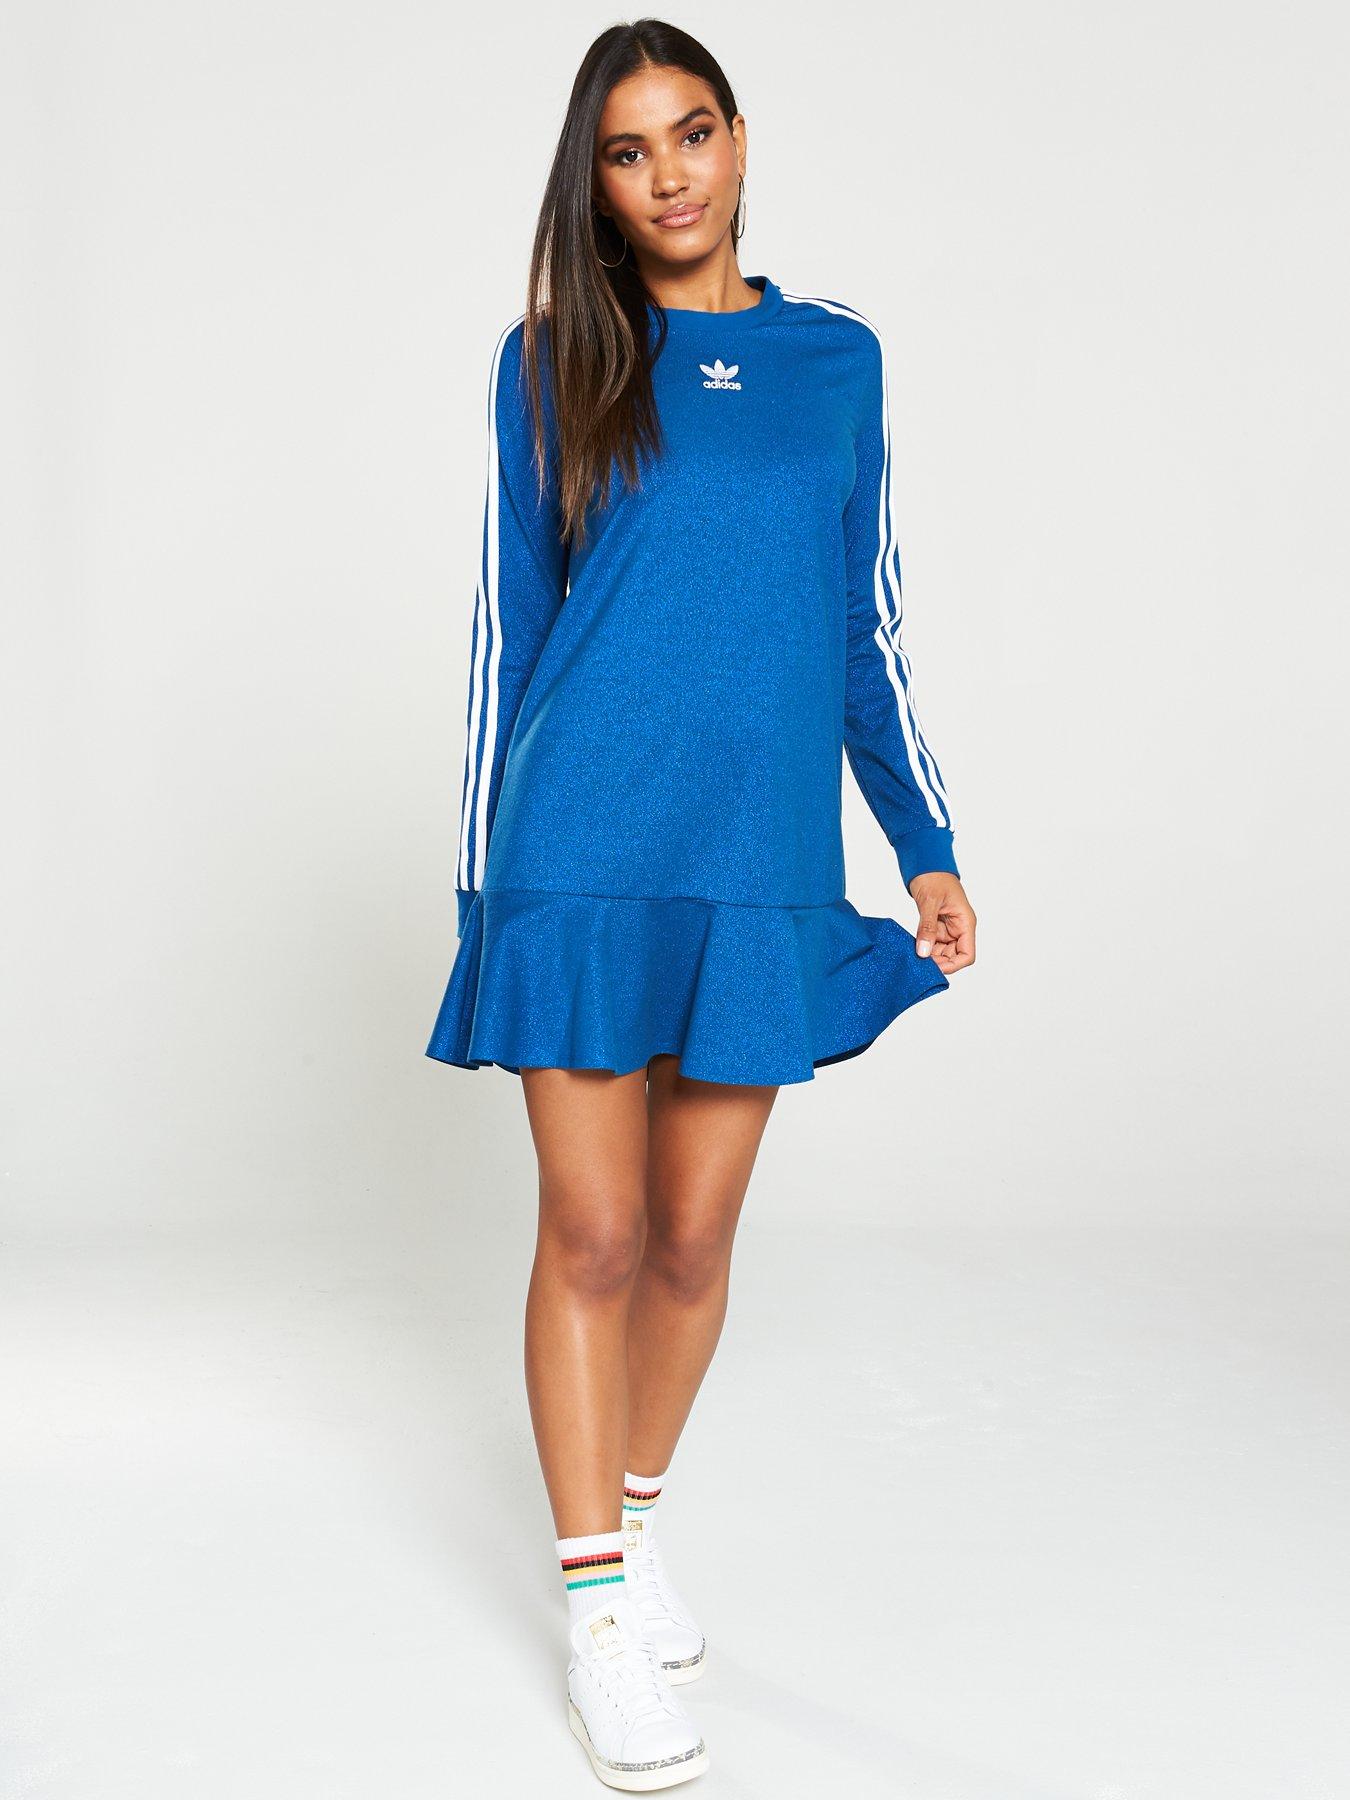 adidas blue dress